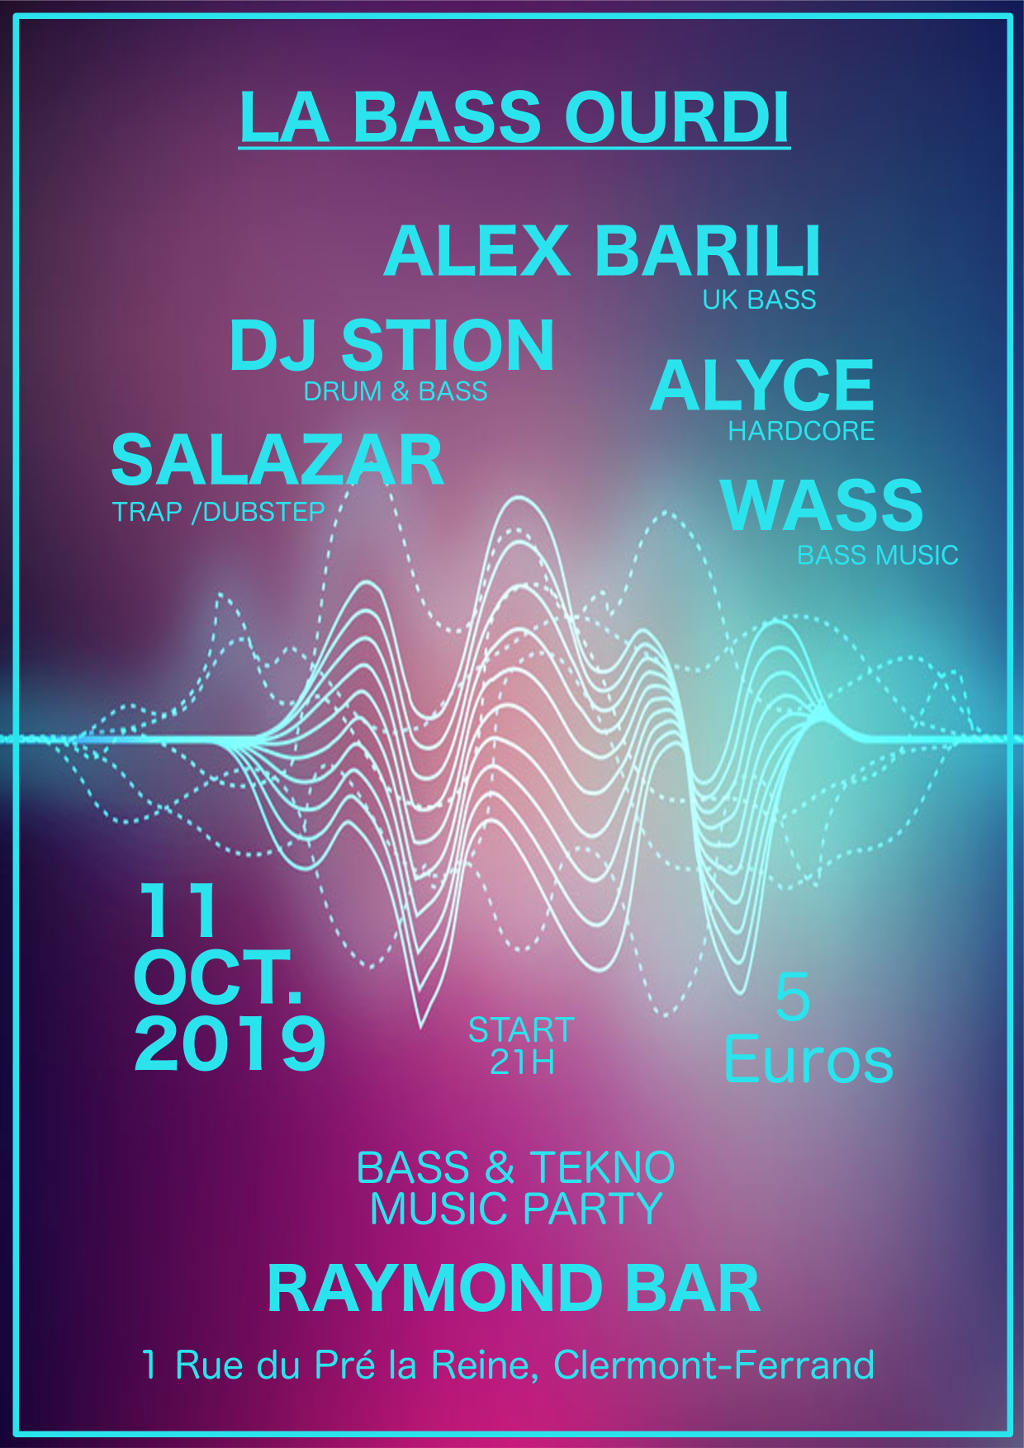 La bass ourdi: Dj Stion / Salazar / Alex Barili / Wass